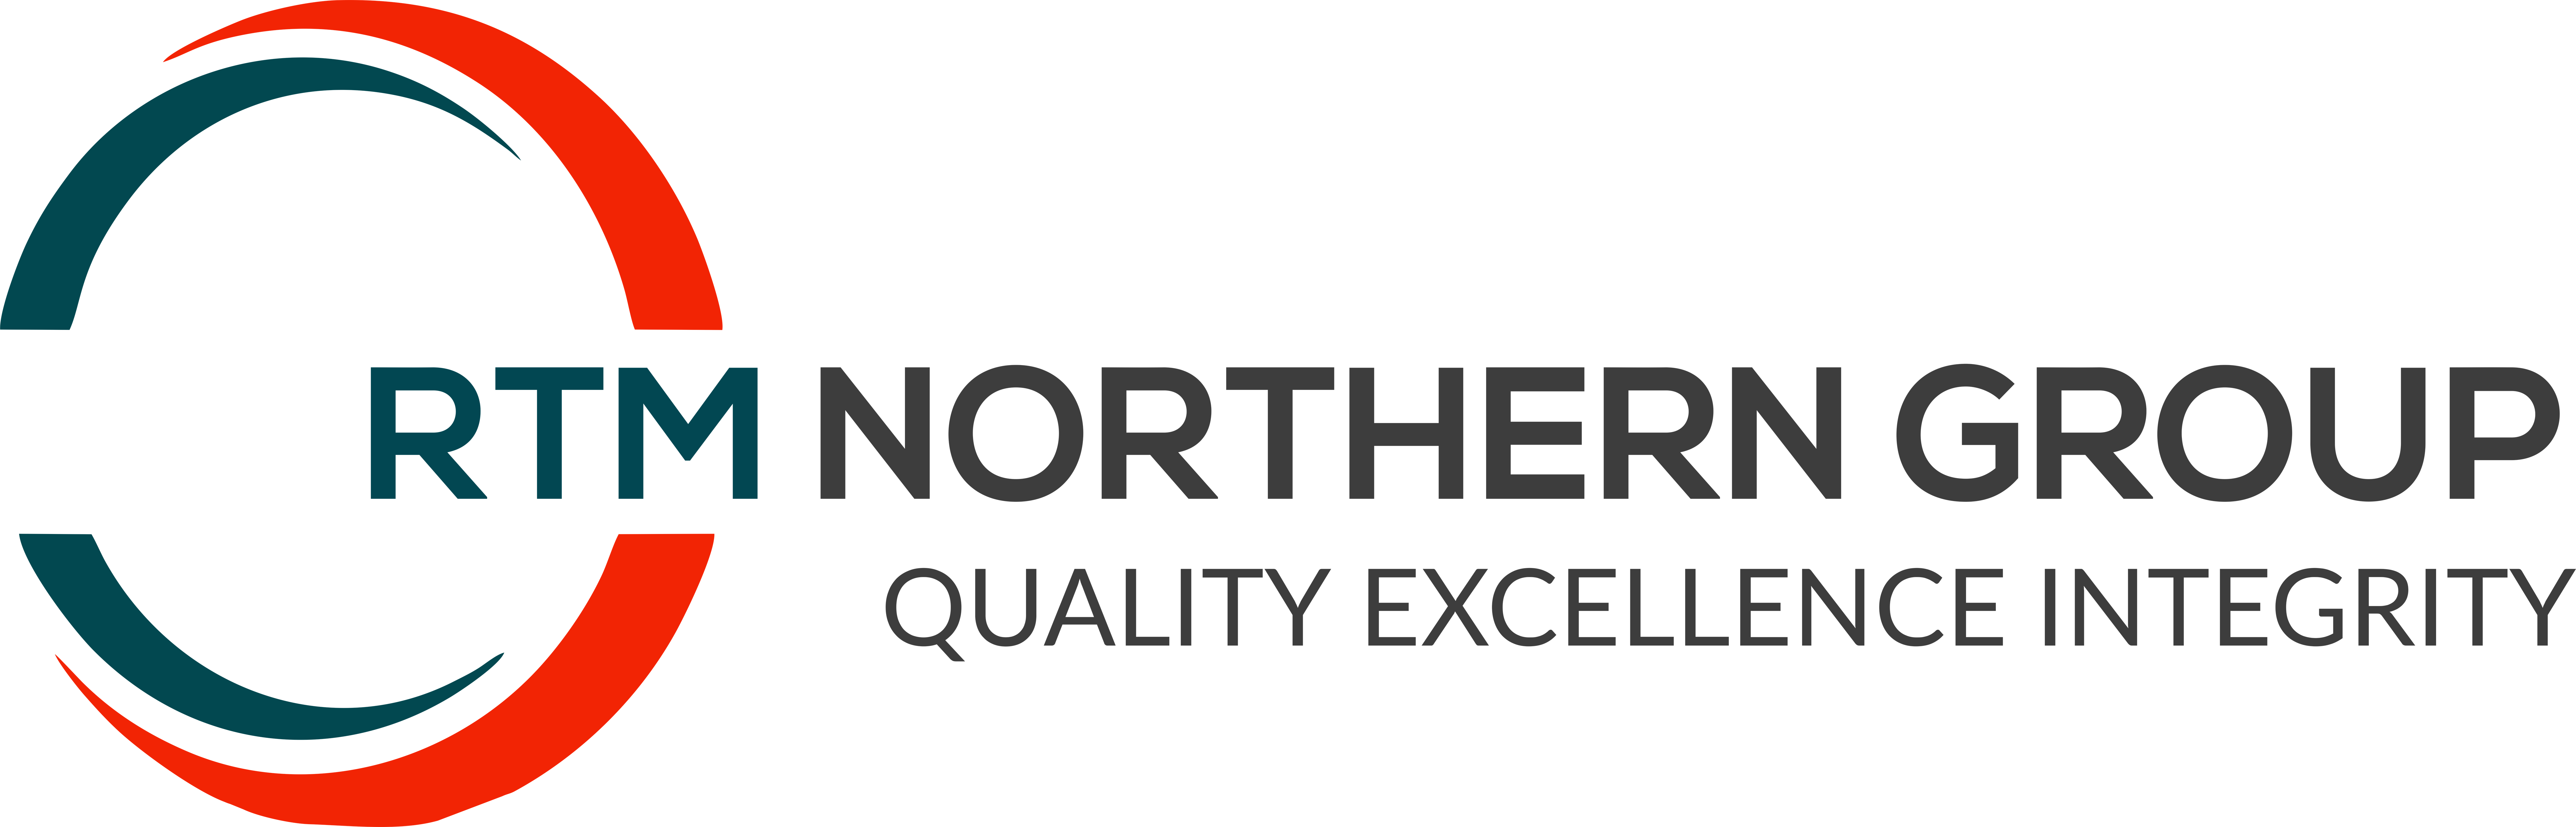 RTM Northern Group logo